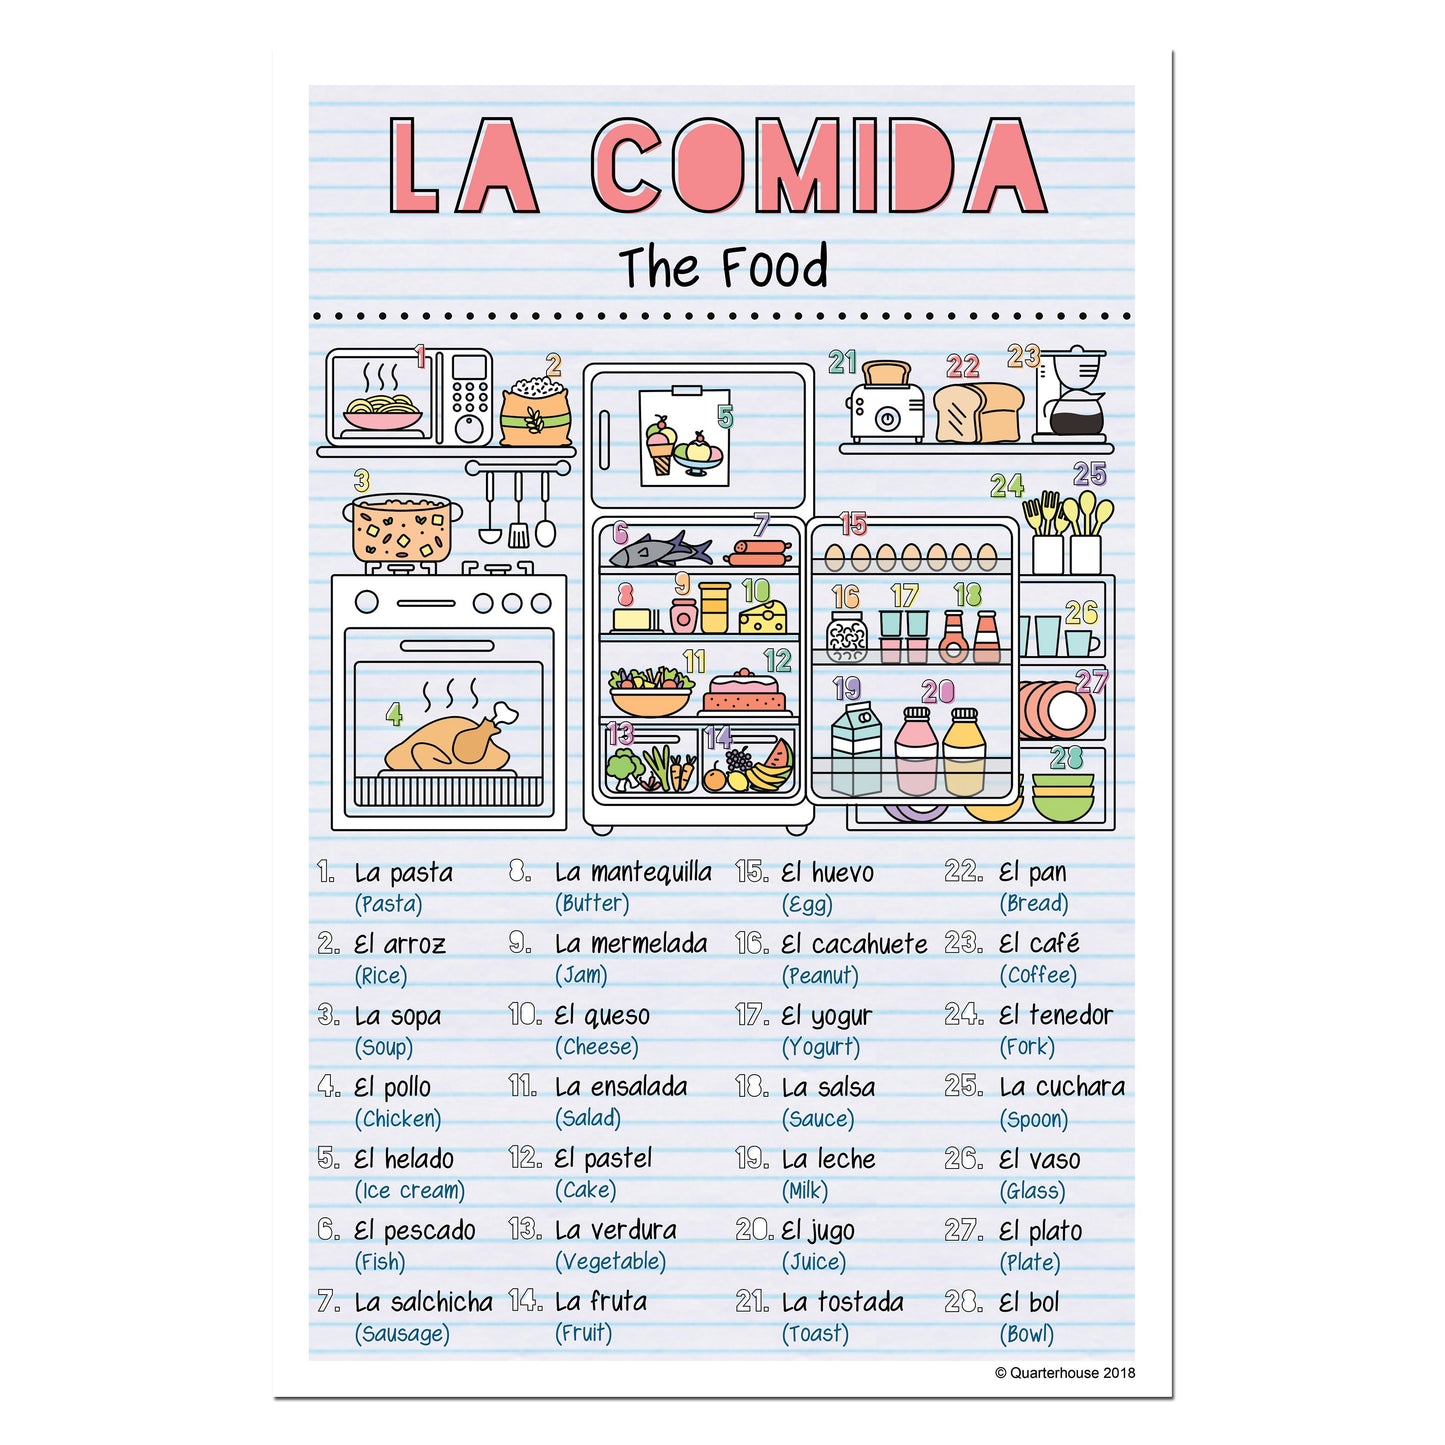 Quarterhouse Spanish Vocabulary - Food Poster, Spanish and ESL Classroom Materials for Teachers